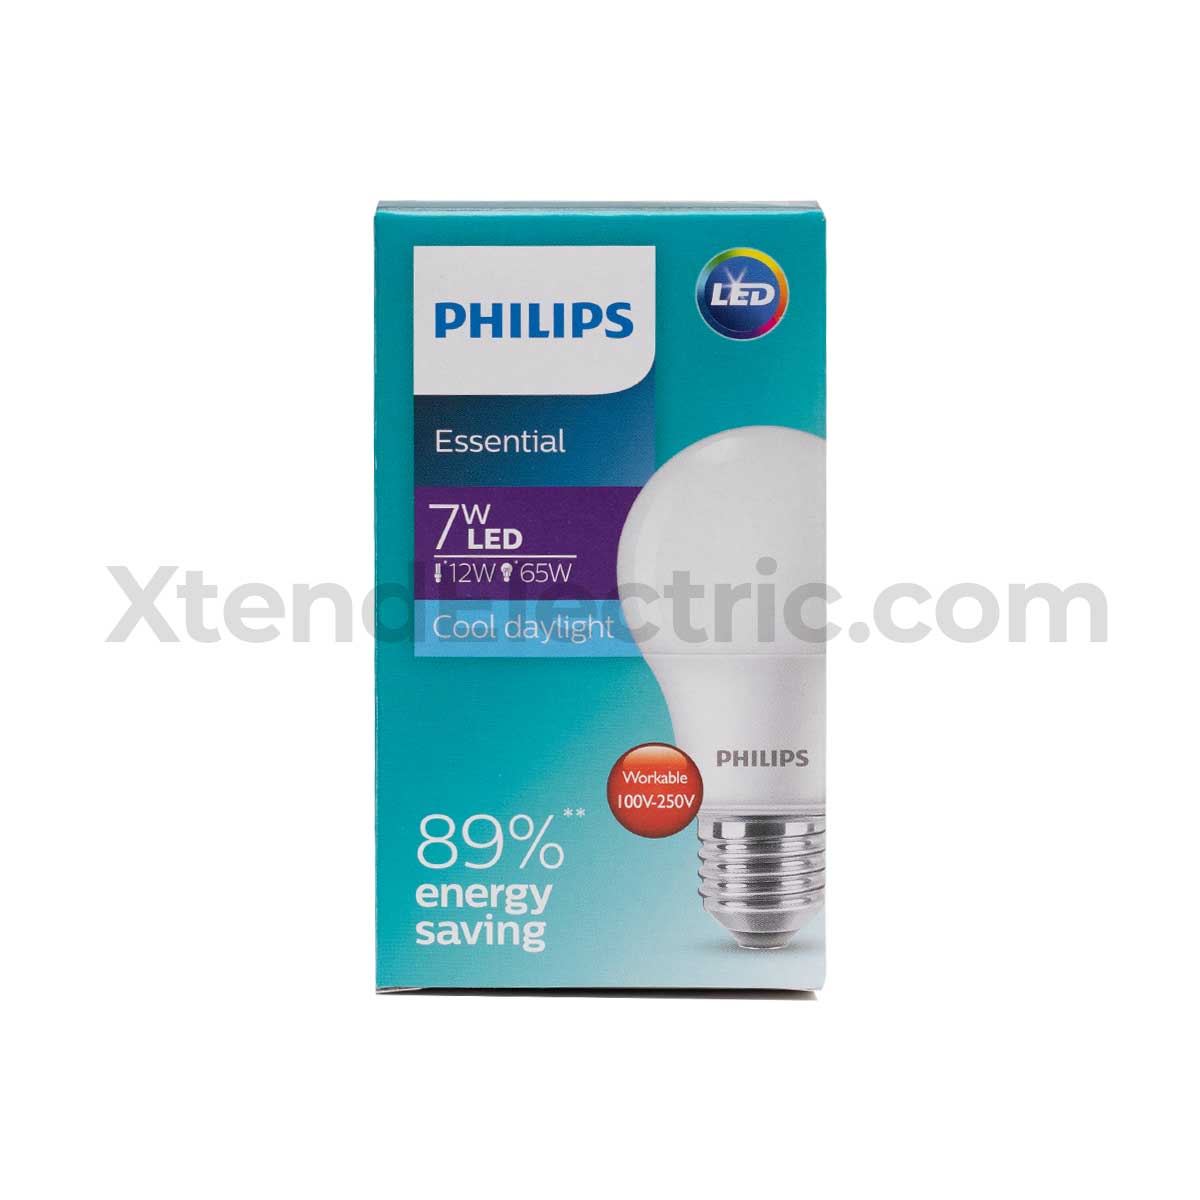 Philips-LED-Bulb-7w-DL-02